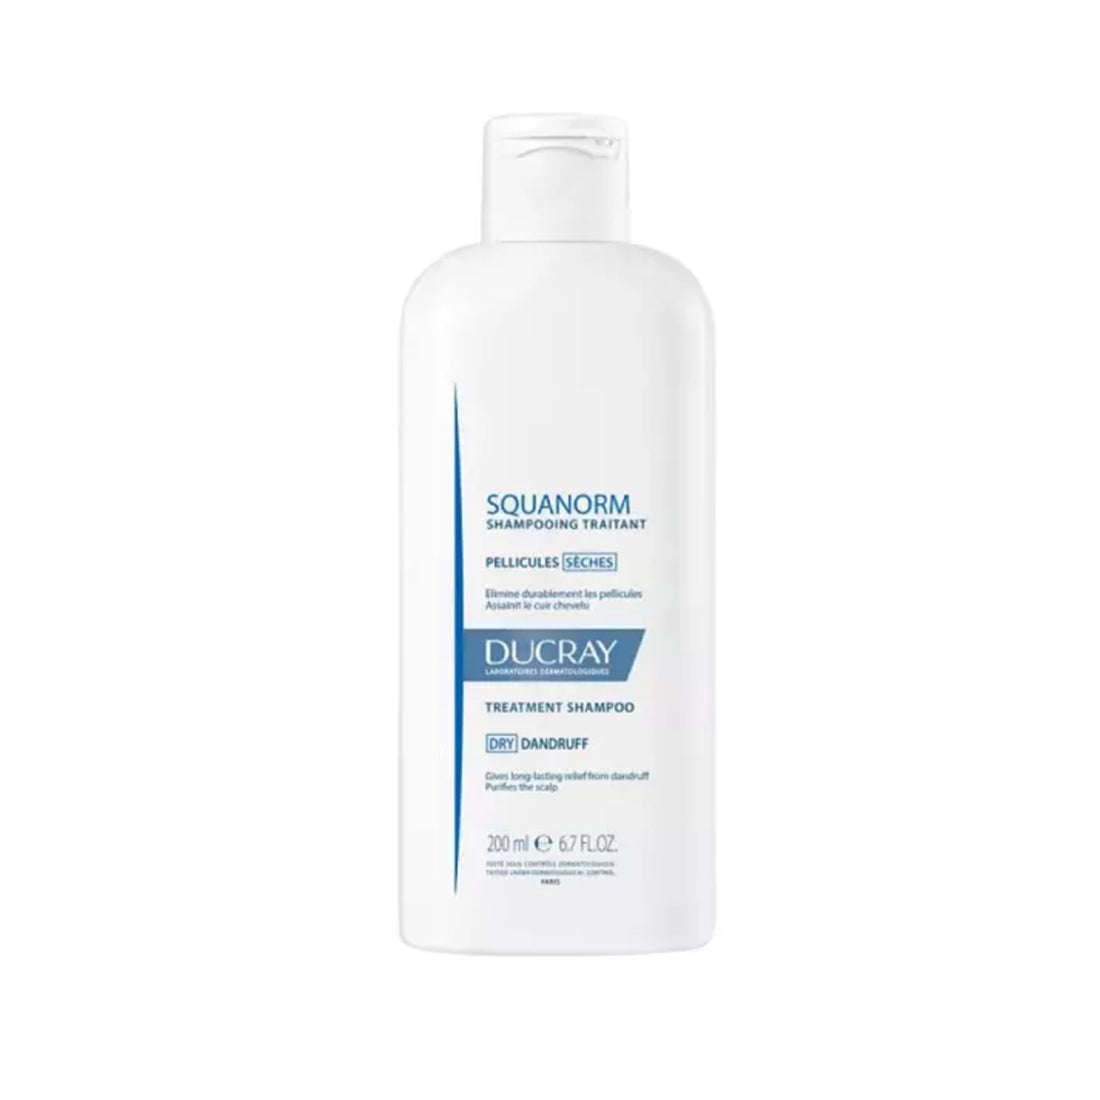 Ducray Squanorm Anti-Dandruff Treatment Shampoo Dry Dandruff 200ml (6.76fl oz)